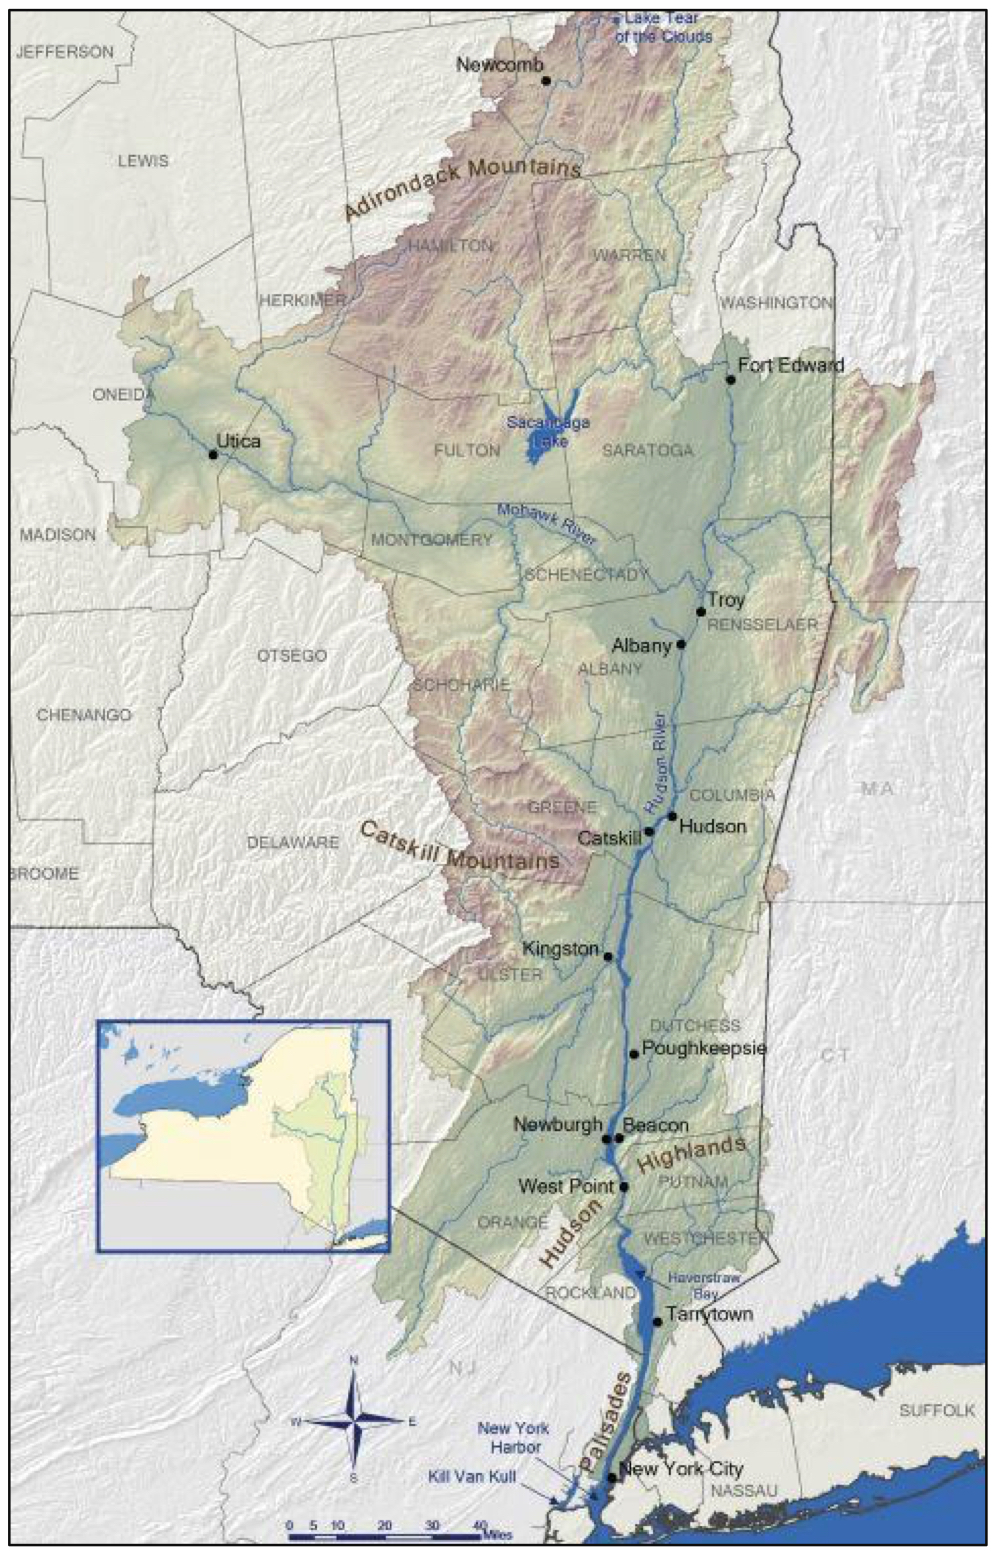 Hudson River Basin (Image by USACE)